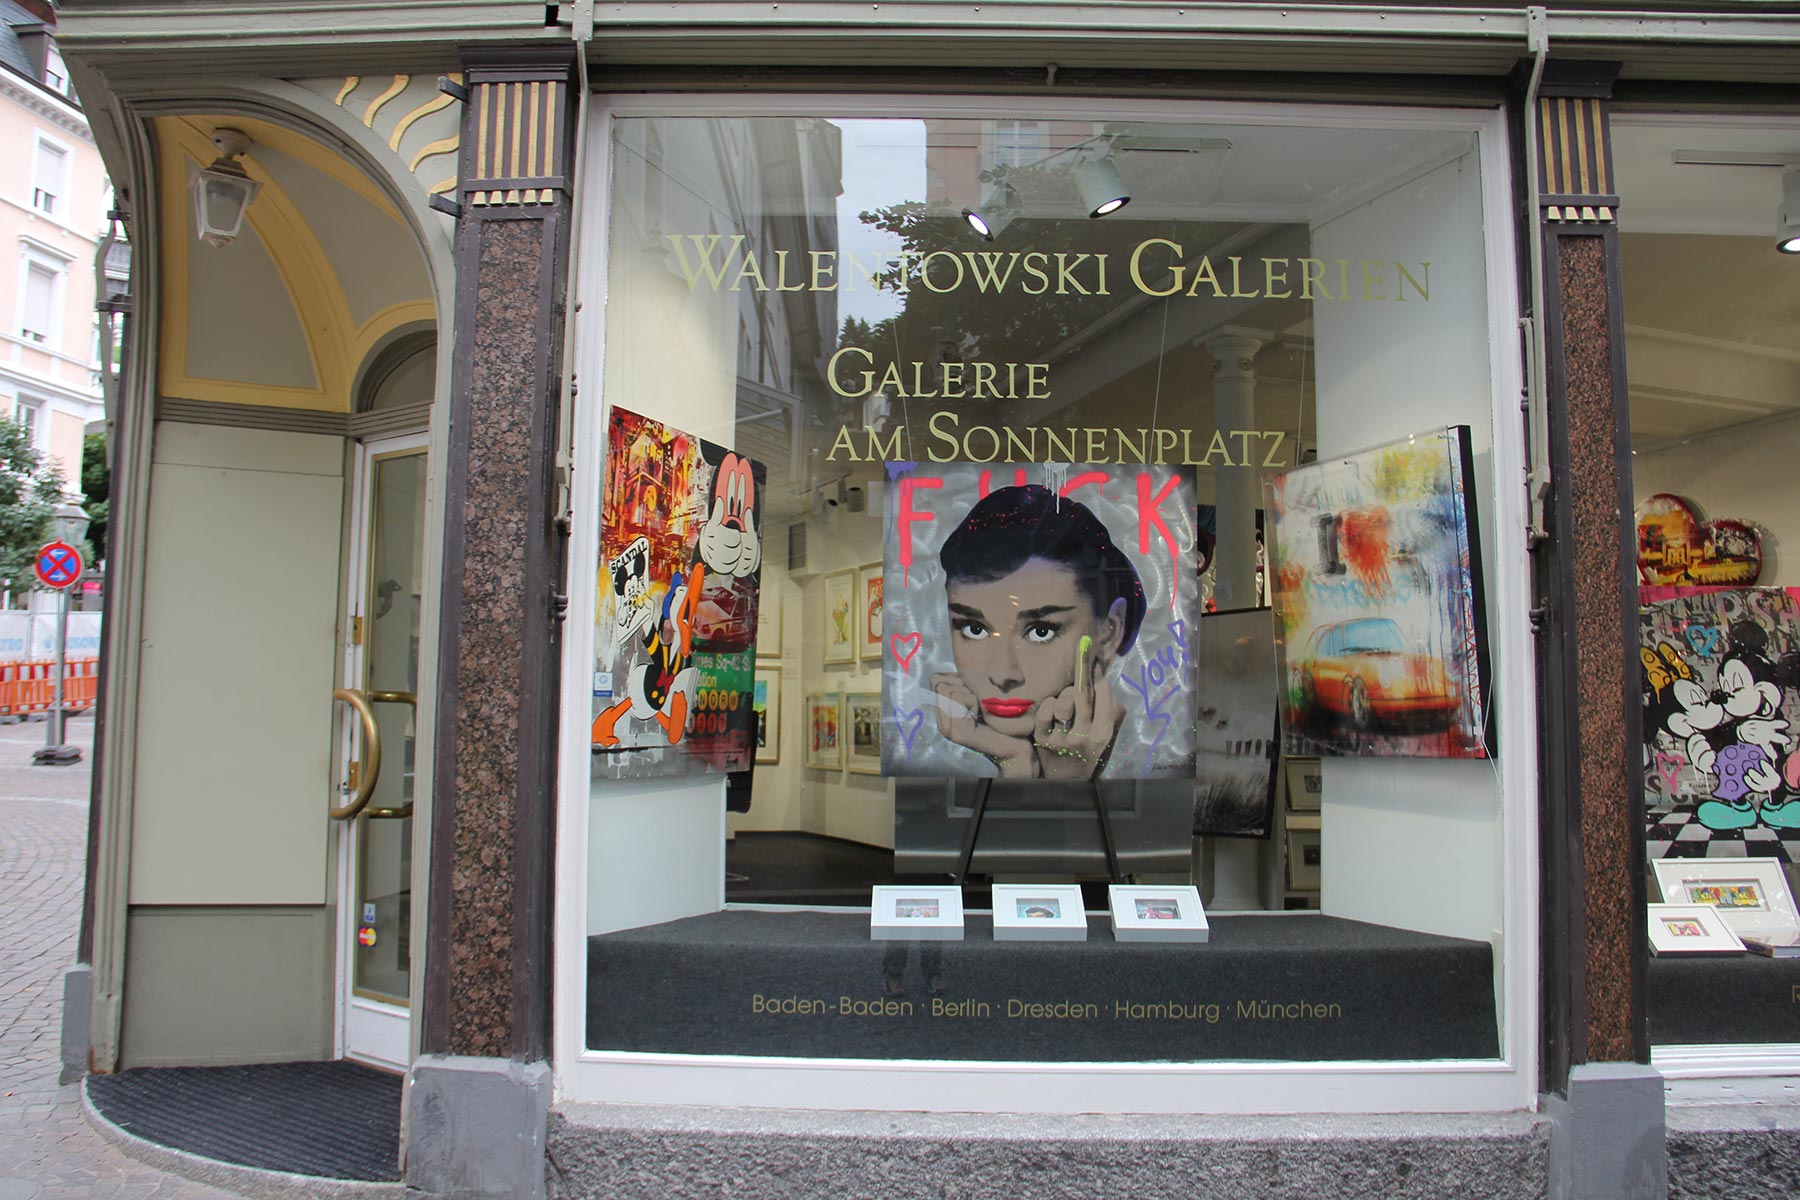 Baden Baden Walentowski Galerie